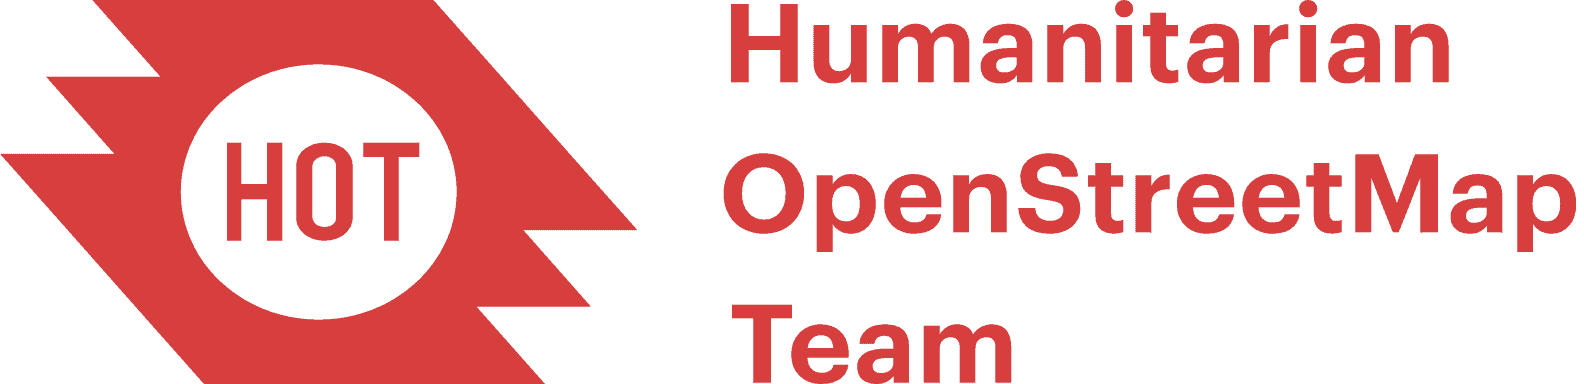 Humanitarian OpenStreetMap Team logo